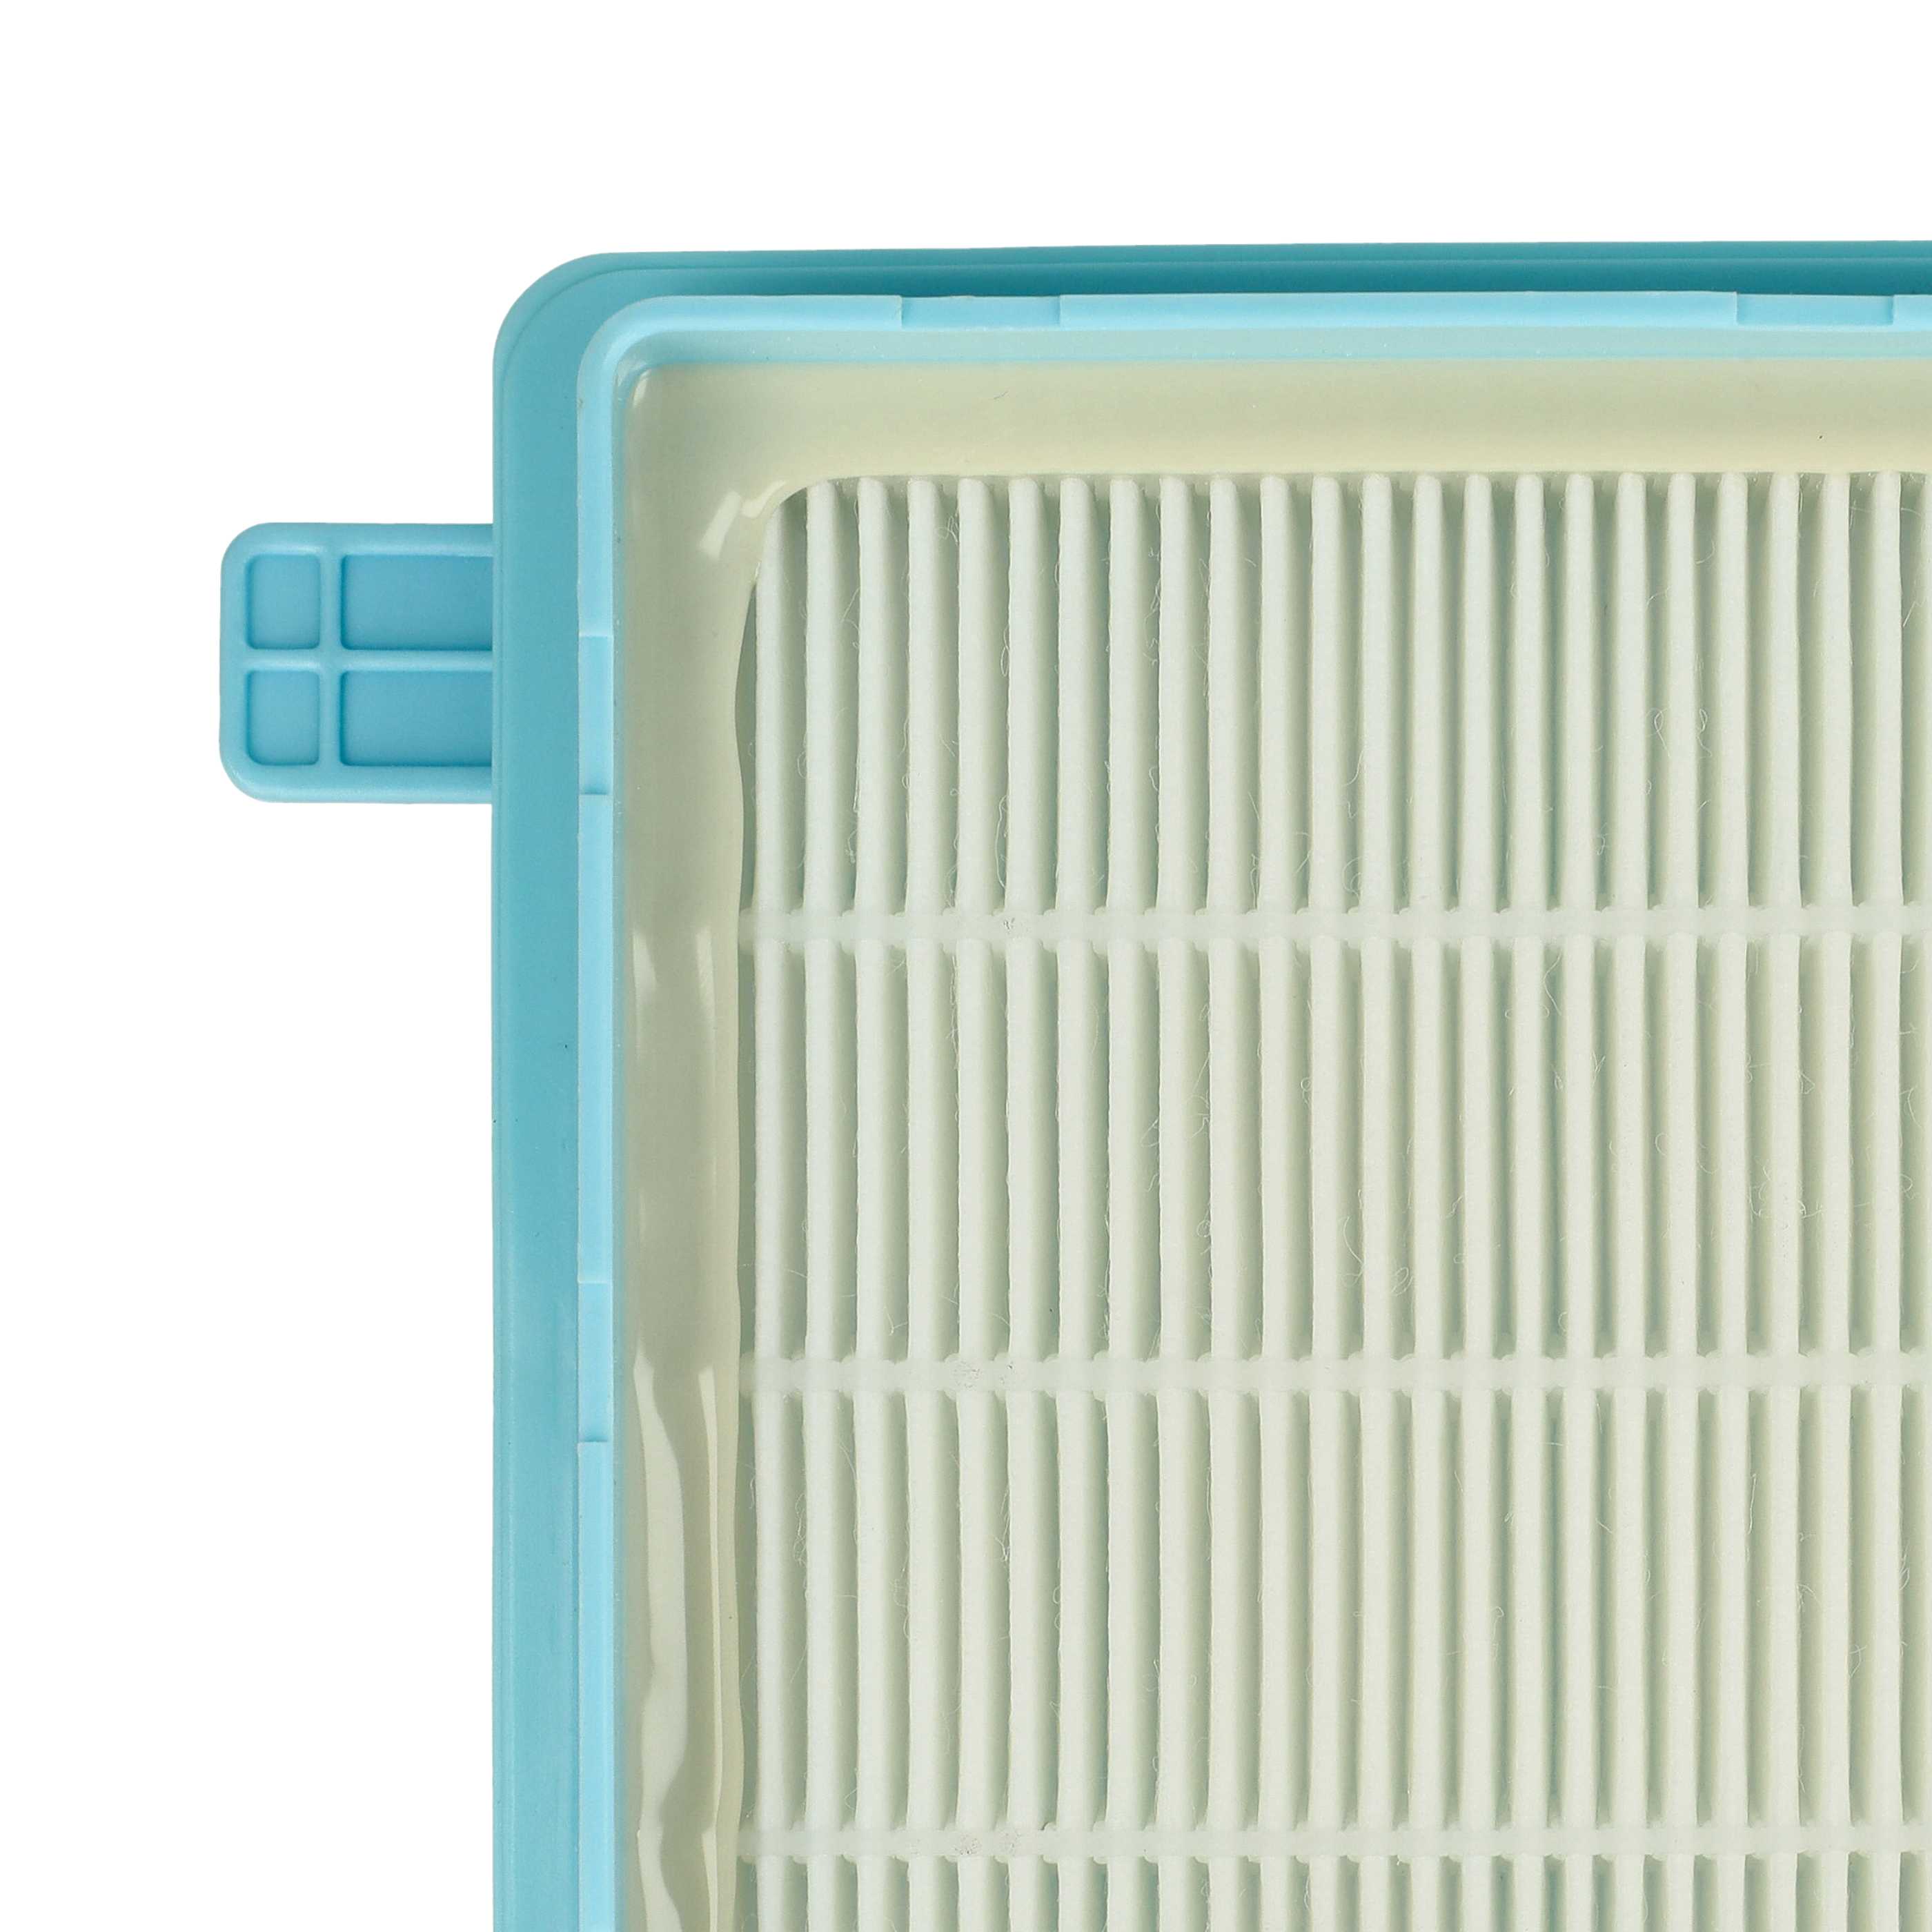 2x HEPA filter replaces Grundig 9178005623 for PhilipsVacuum Cleaner